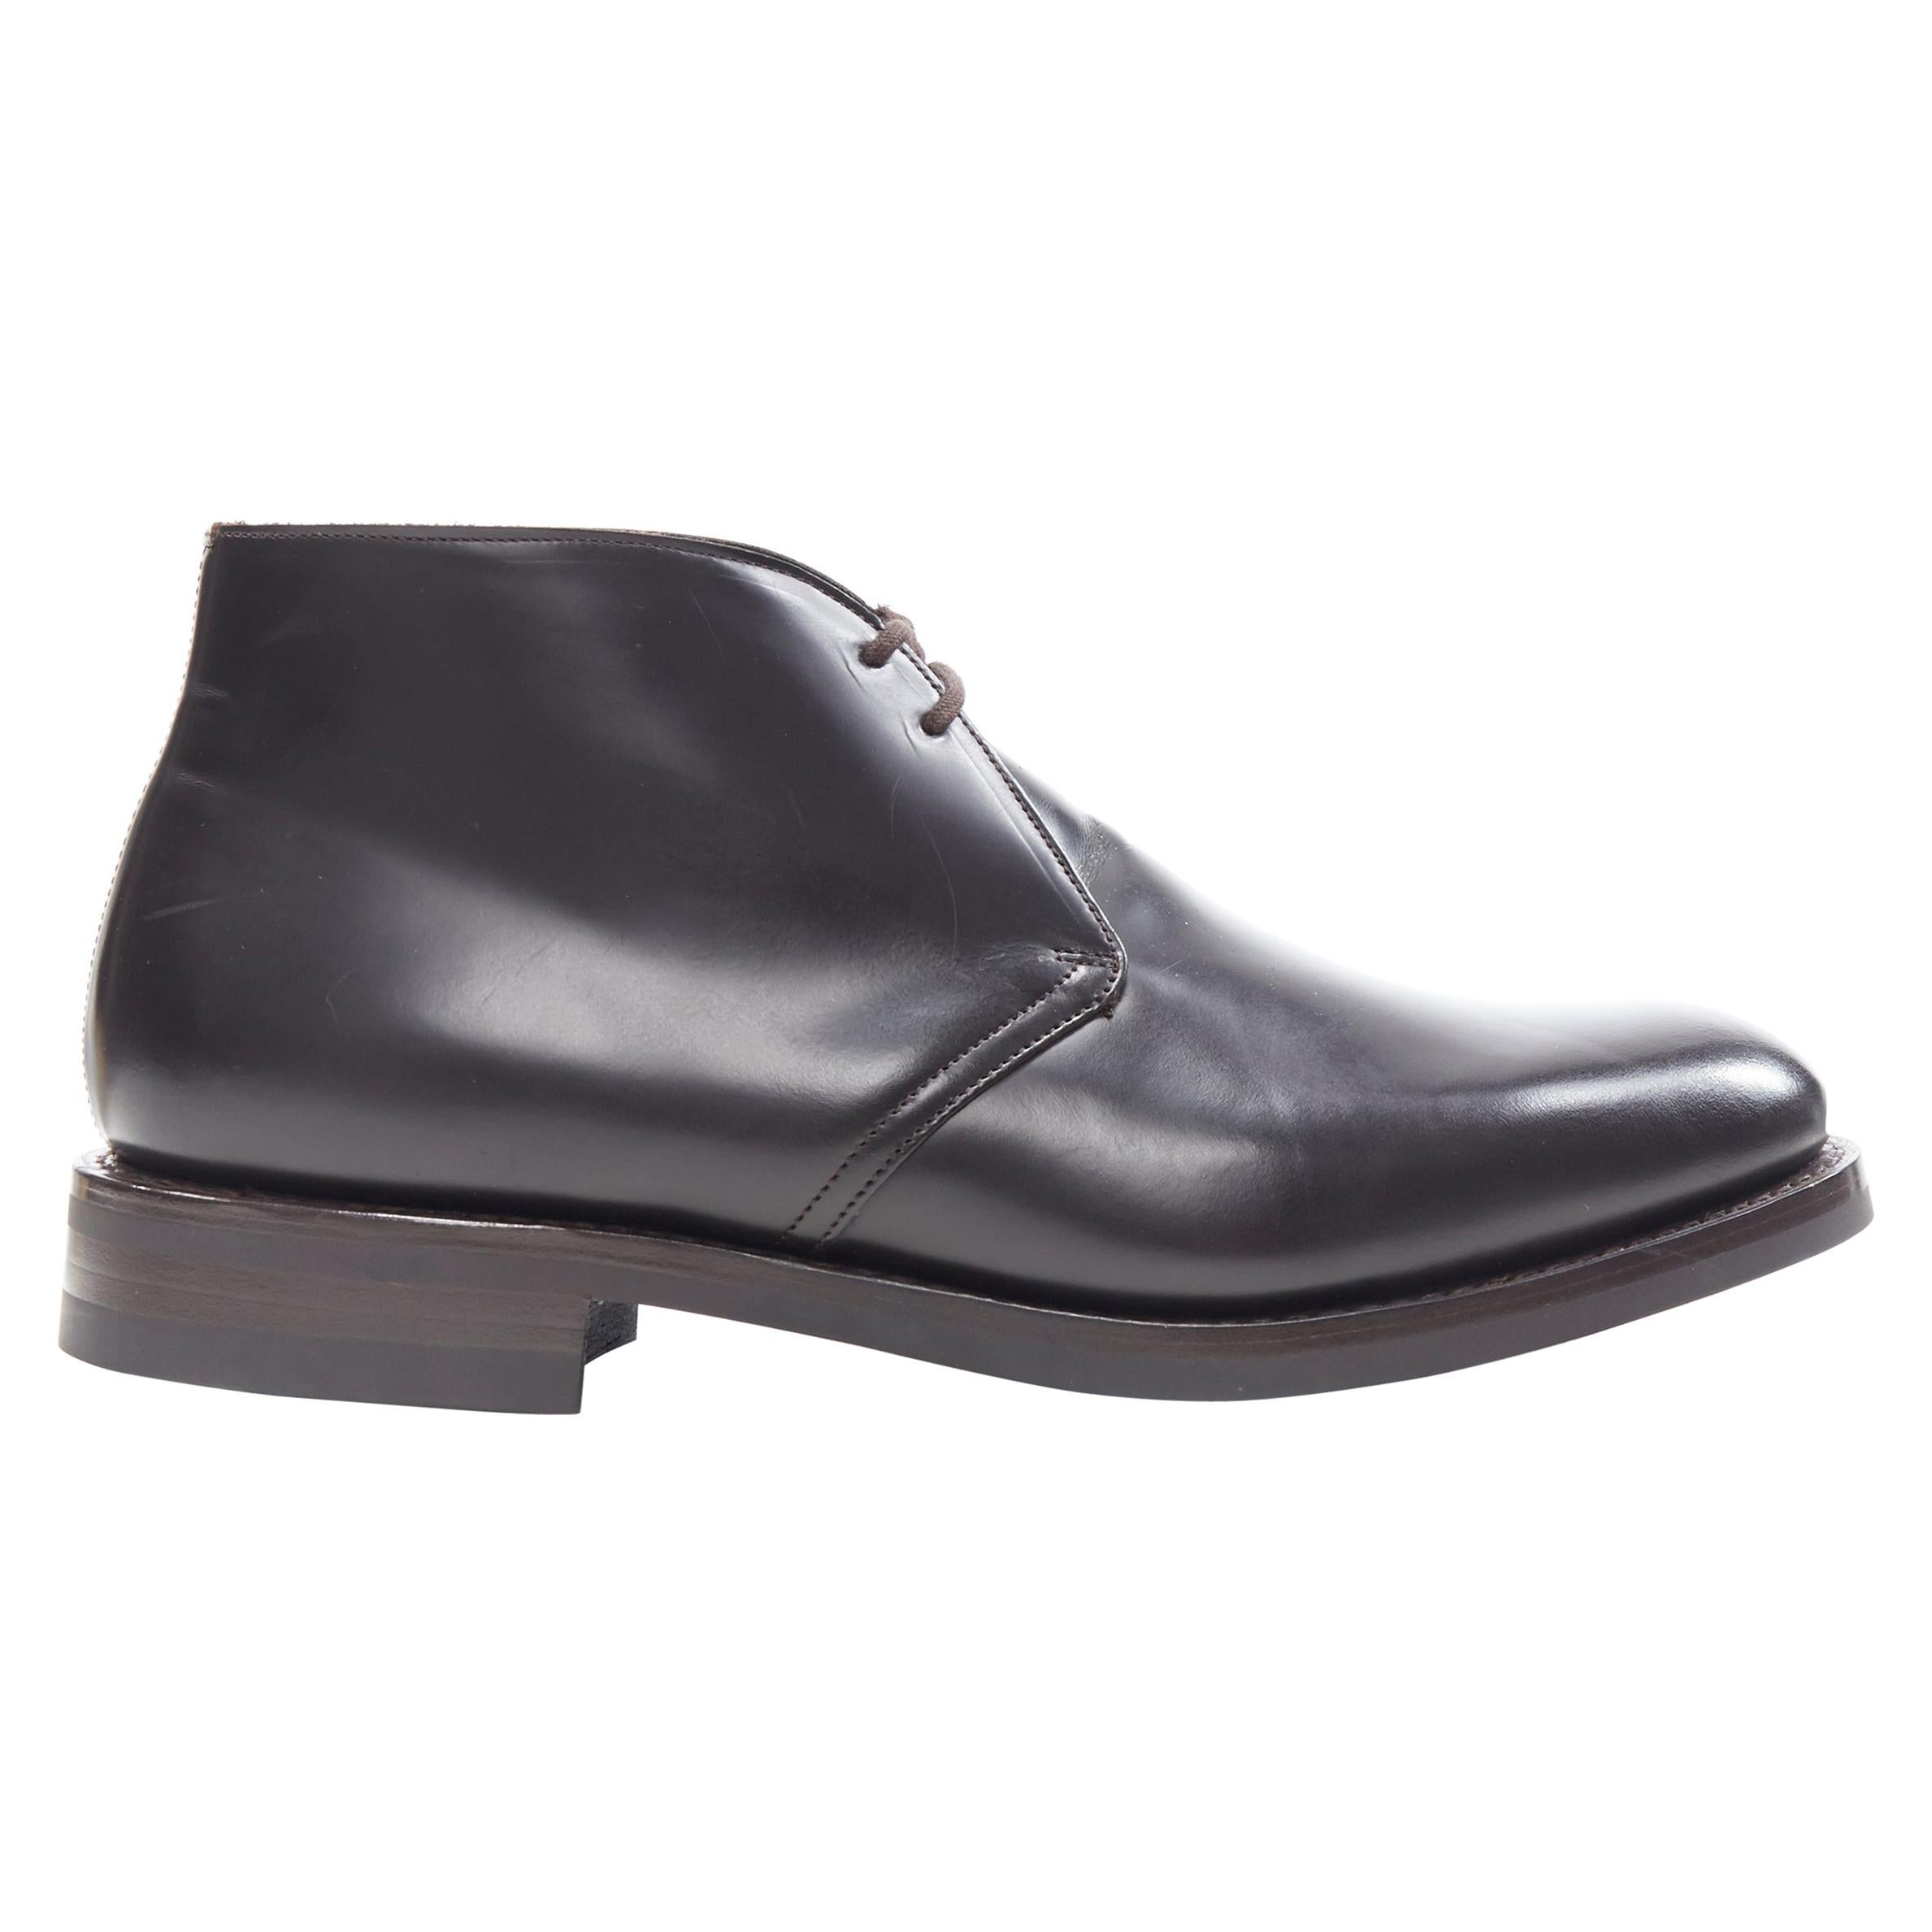 new CHURCH'S Ryder 3 Ebony Bright Calf dark brown leather desert boots UK11 EU45